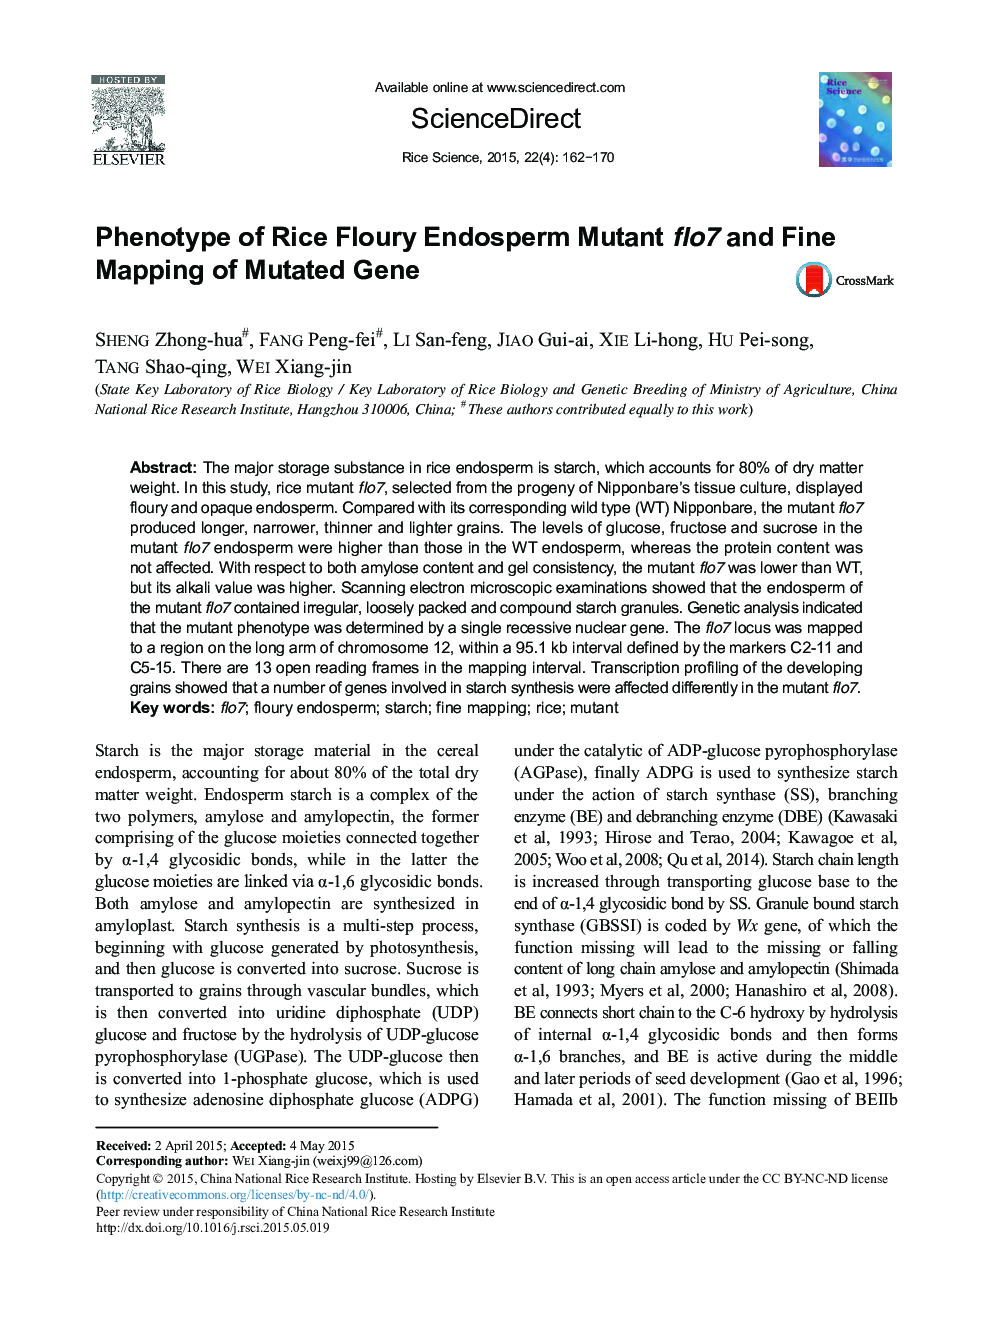 Phenotype of Rice Floury Endosperm Mutant flo7 and Fine Mapping of Mutated Gene 